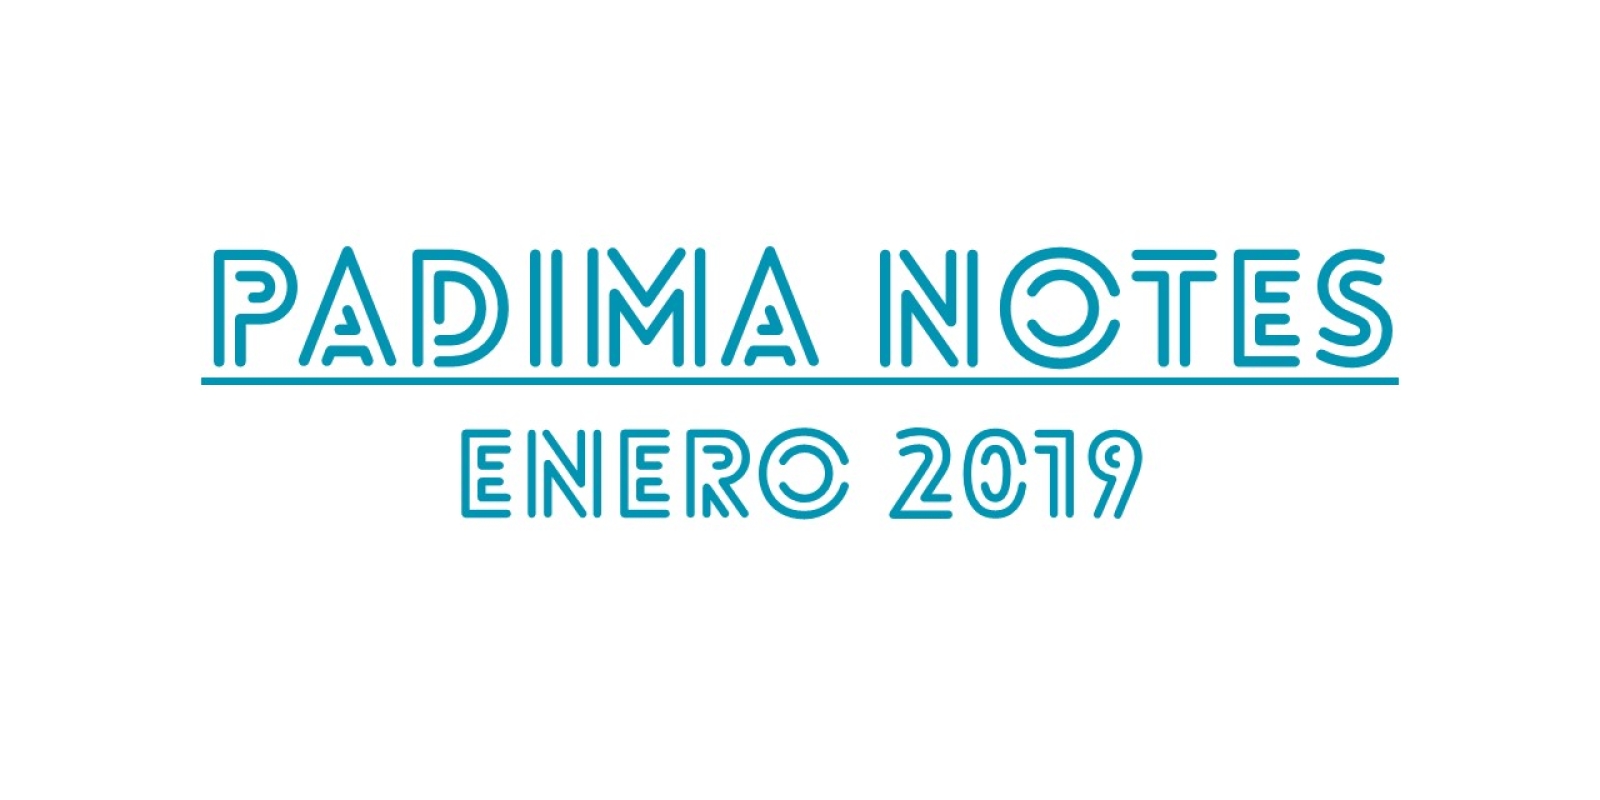 Padima Notes enero 2019